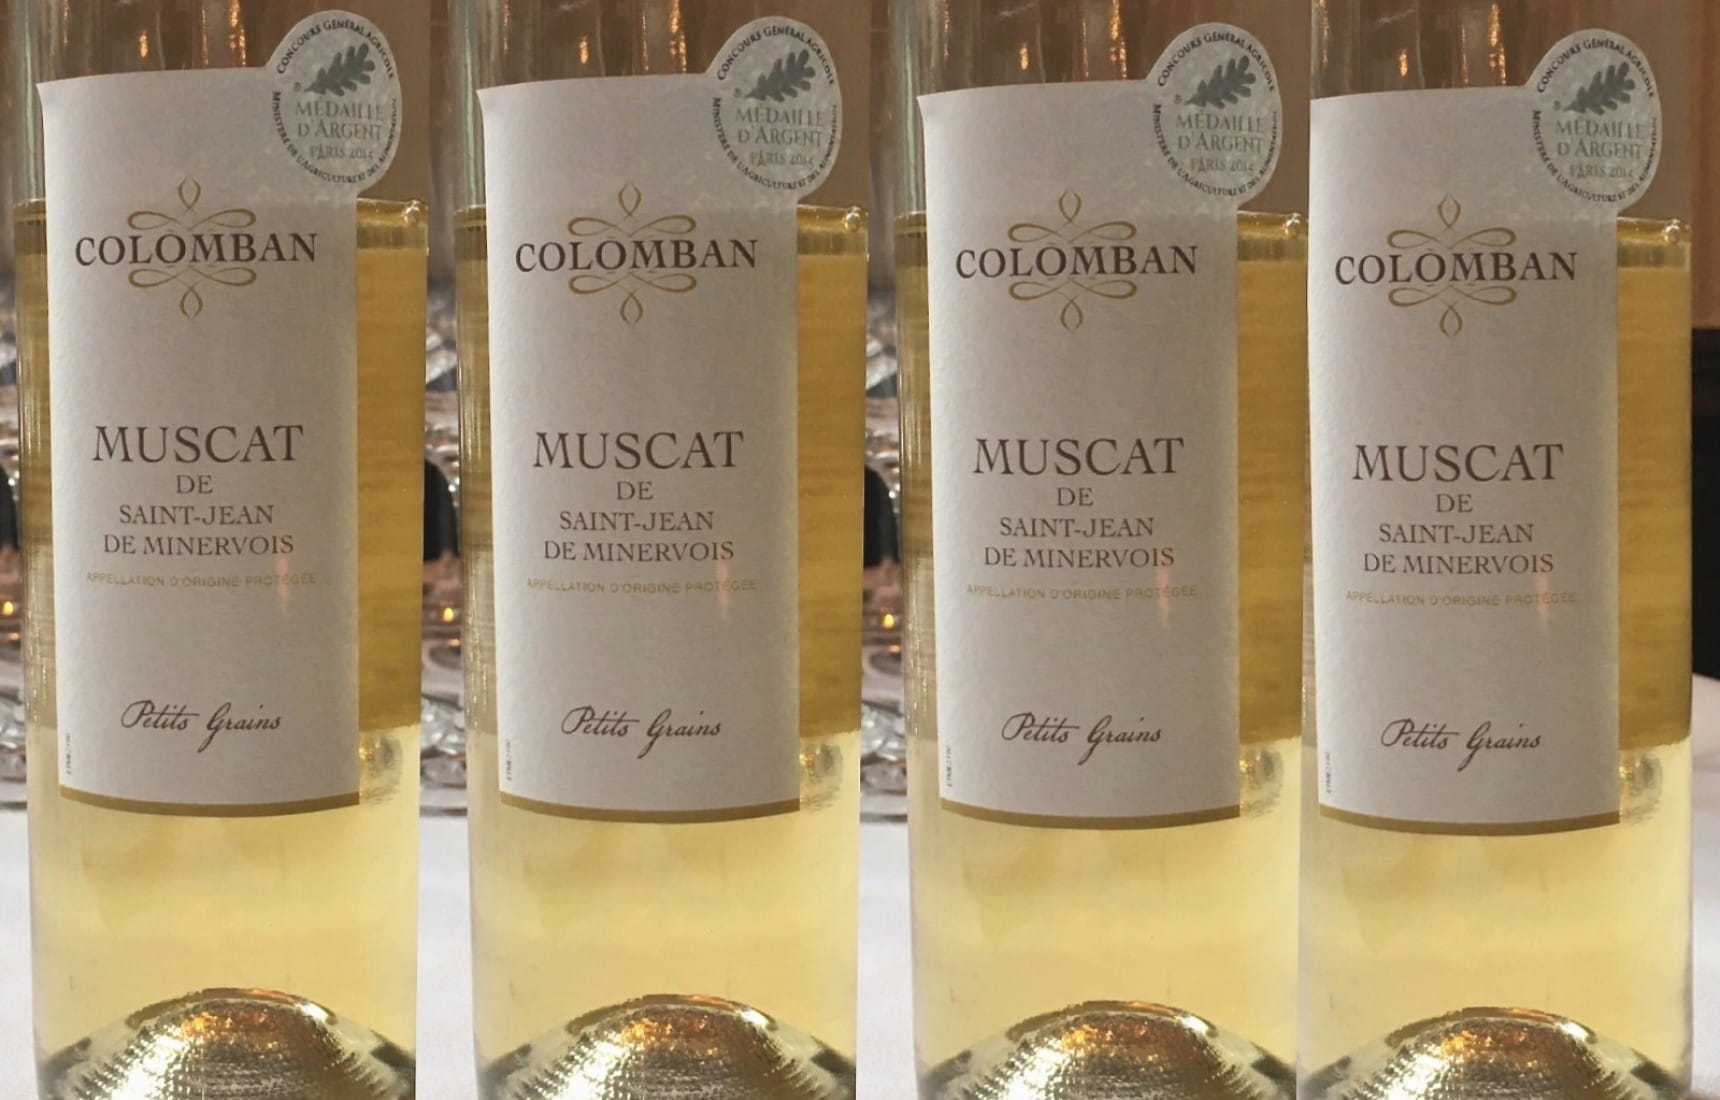 Colomban Muscat de Saint-Jean de Minervois | Matching Food & Wine